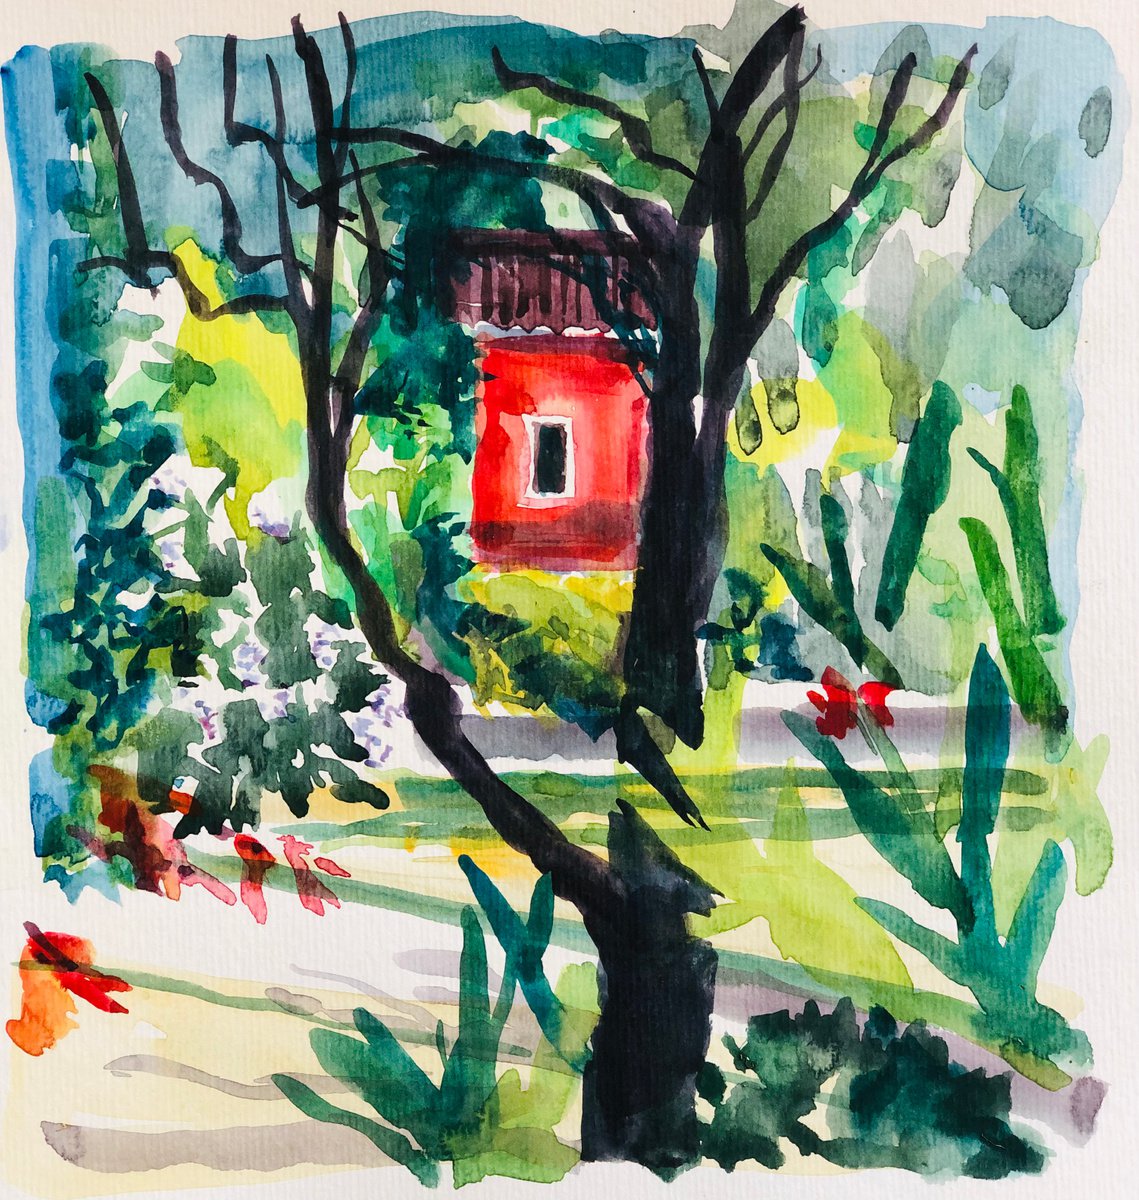 Red Villa through the trees, Greece by Annie Meier